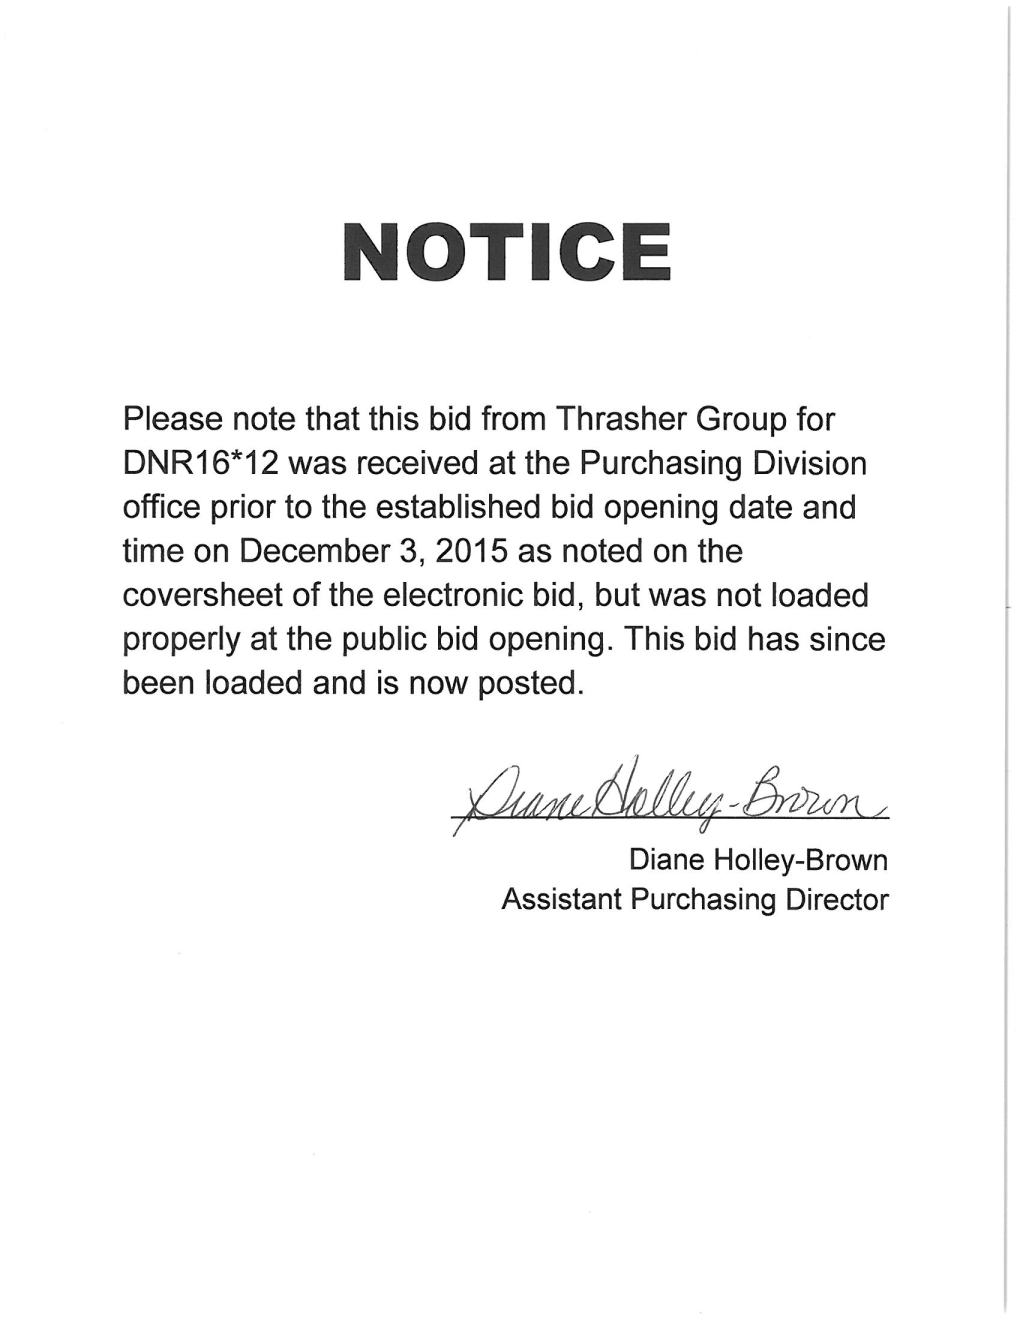 The Thrasher Group, Inc